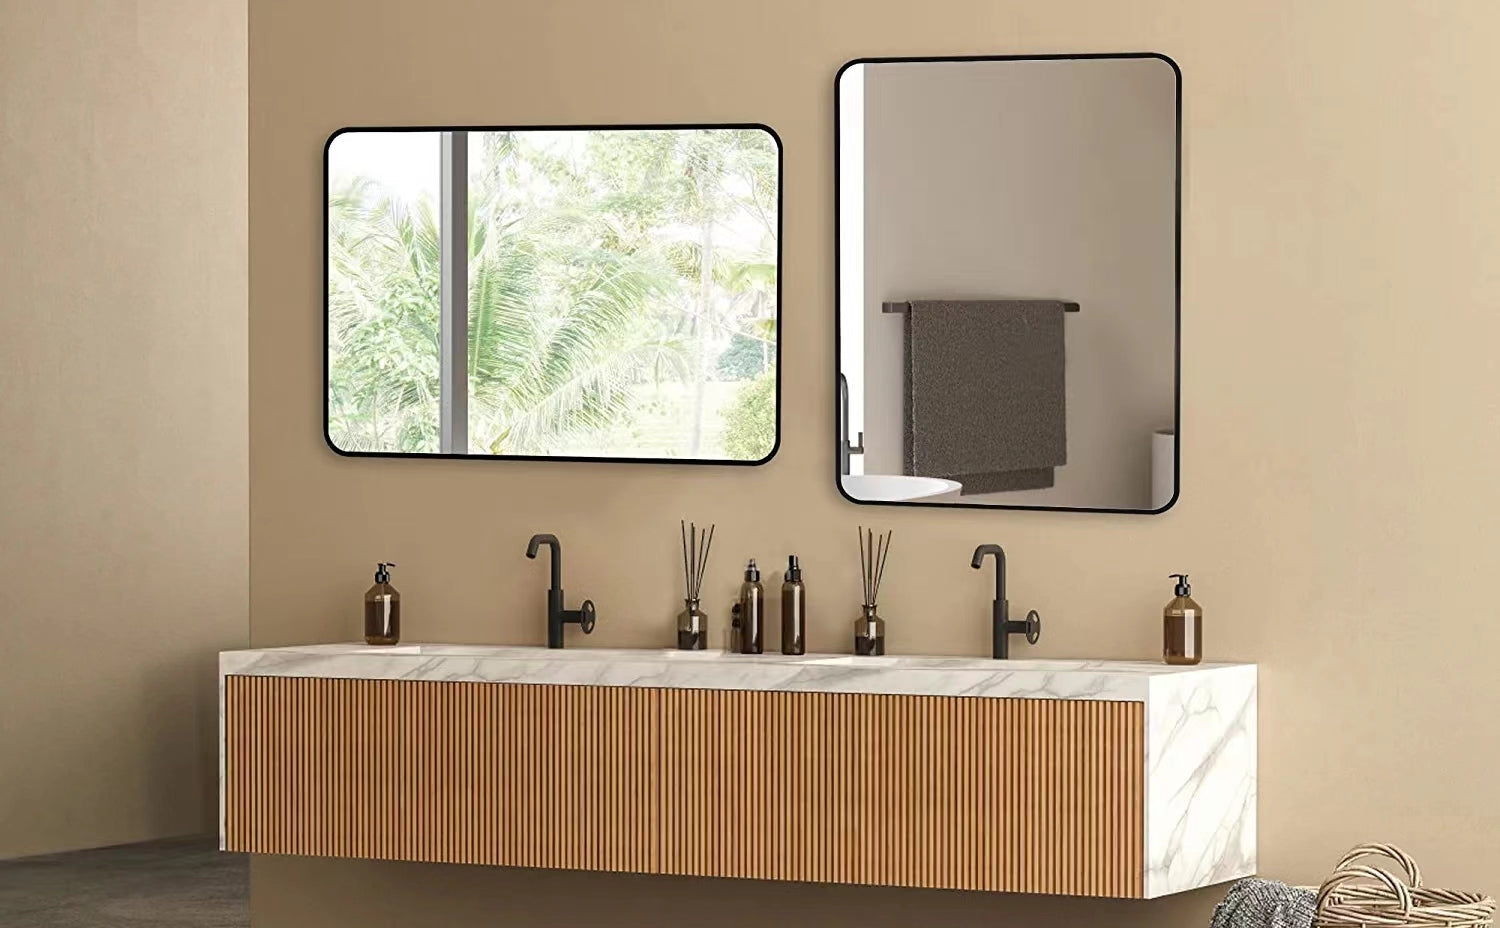 Black 24 "x32" Metal Rectangular Bathroom Wall Mirror black-mdf+glass-aluminium